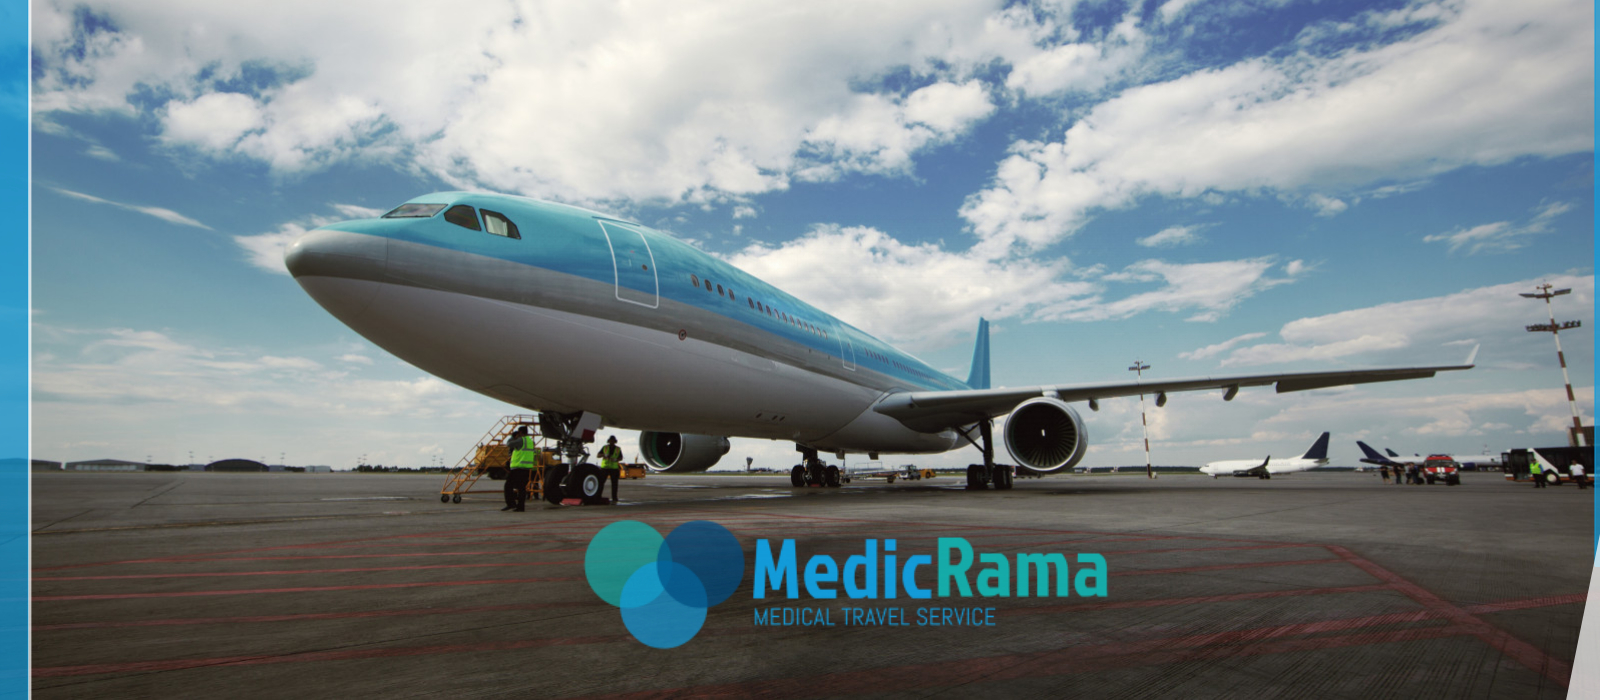 Medicrama Medical Travel Service